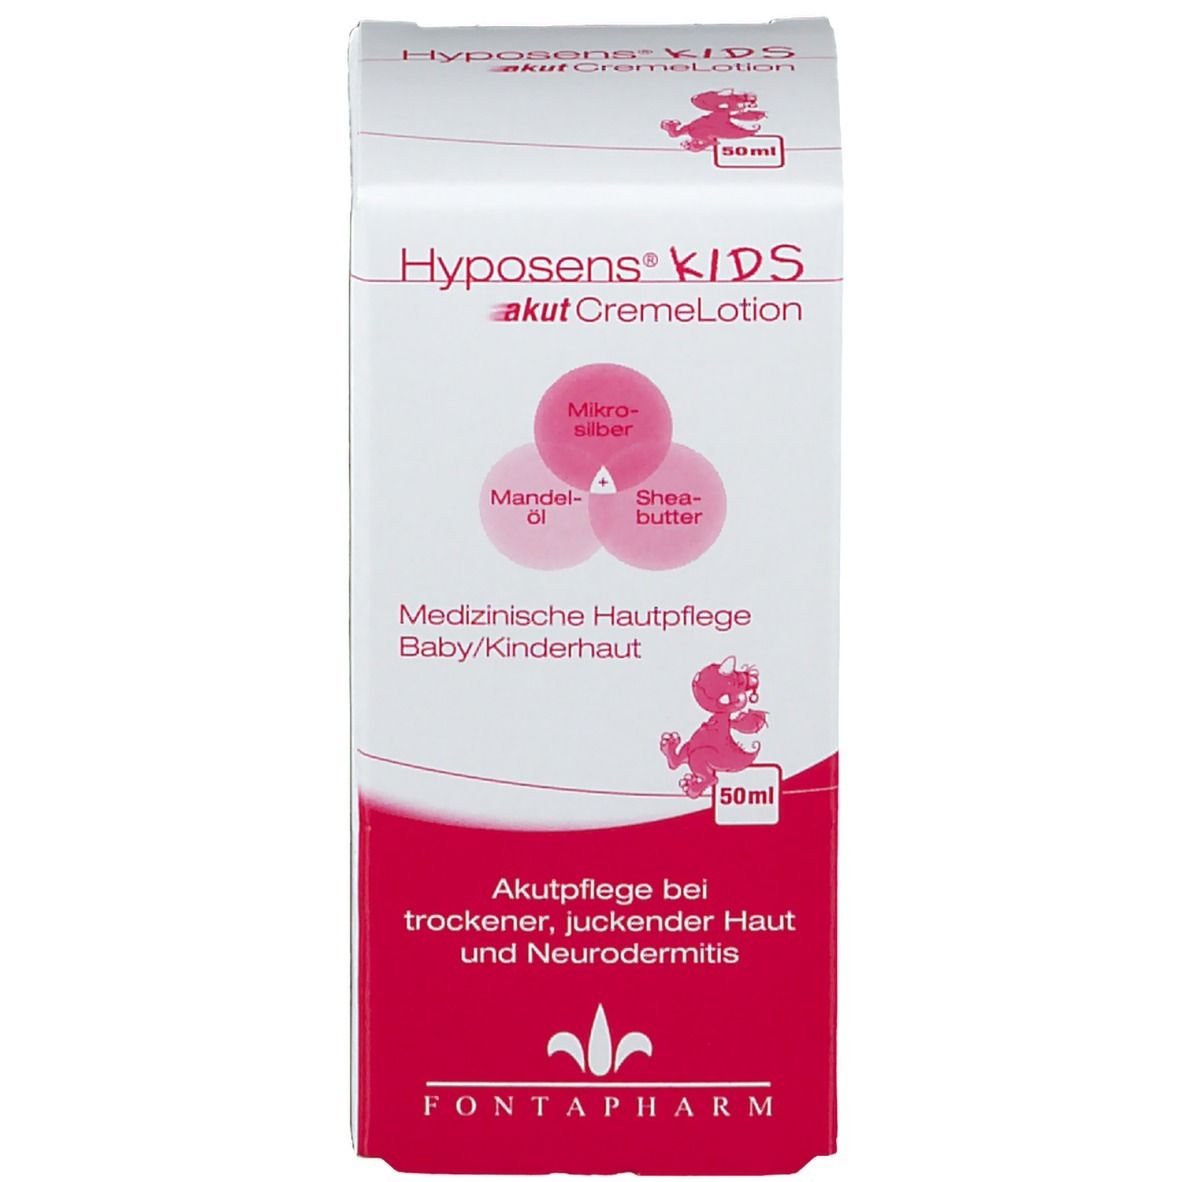 Hyposens® Kids CremeLotion